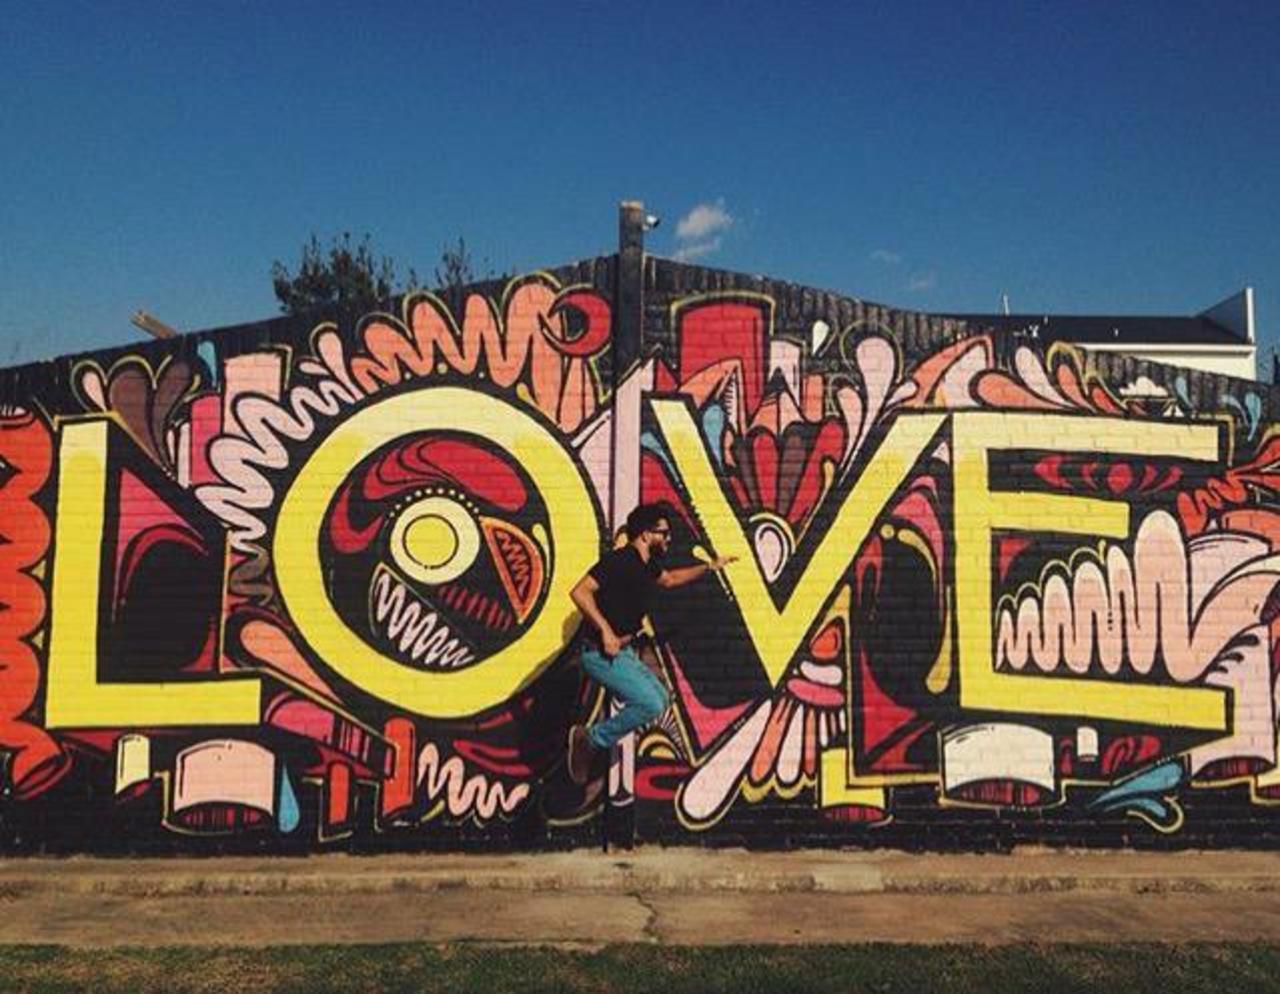 Love ❤️
Street Art by WileyArt

#art #graffiti #mural #streetart http://t.co/S5tnSorim4